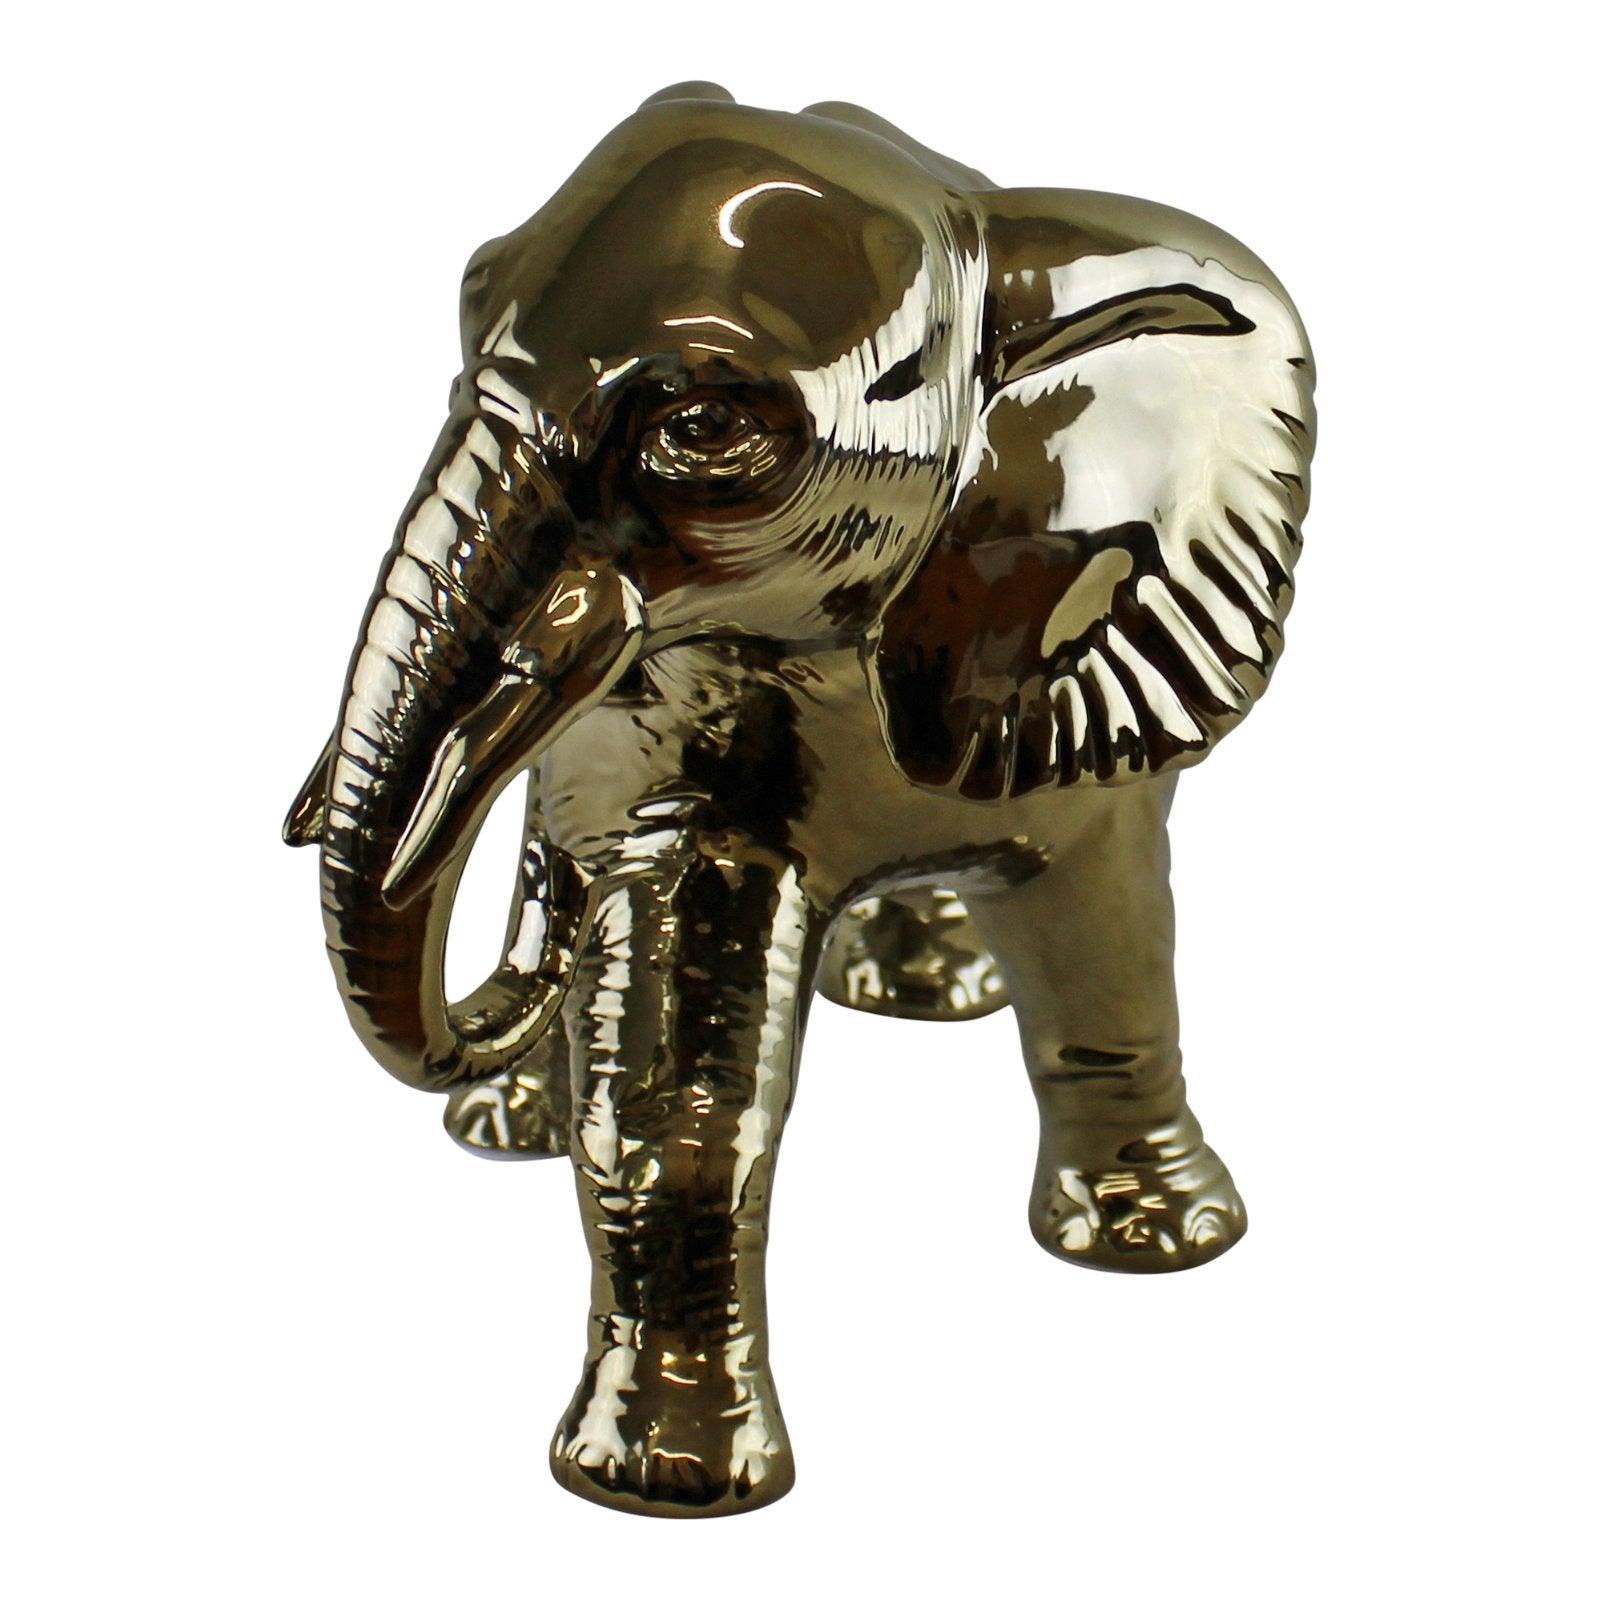 Large Golden Elephant Ornament 34cm - £61.99 - Animals 